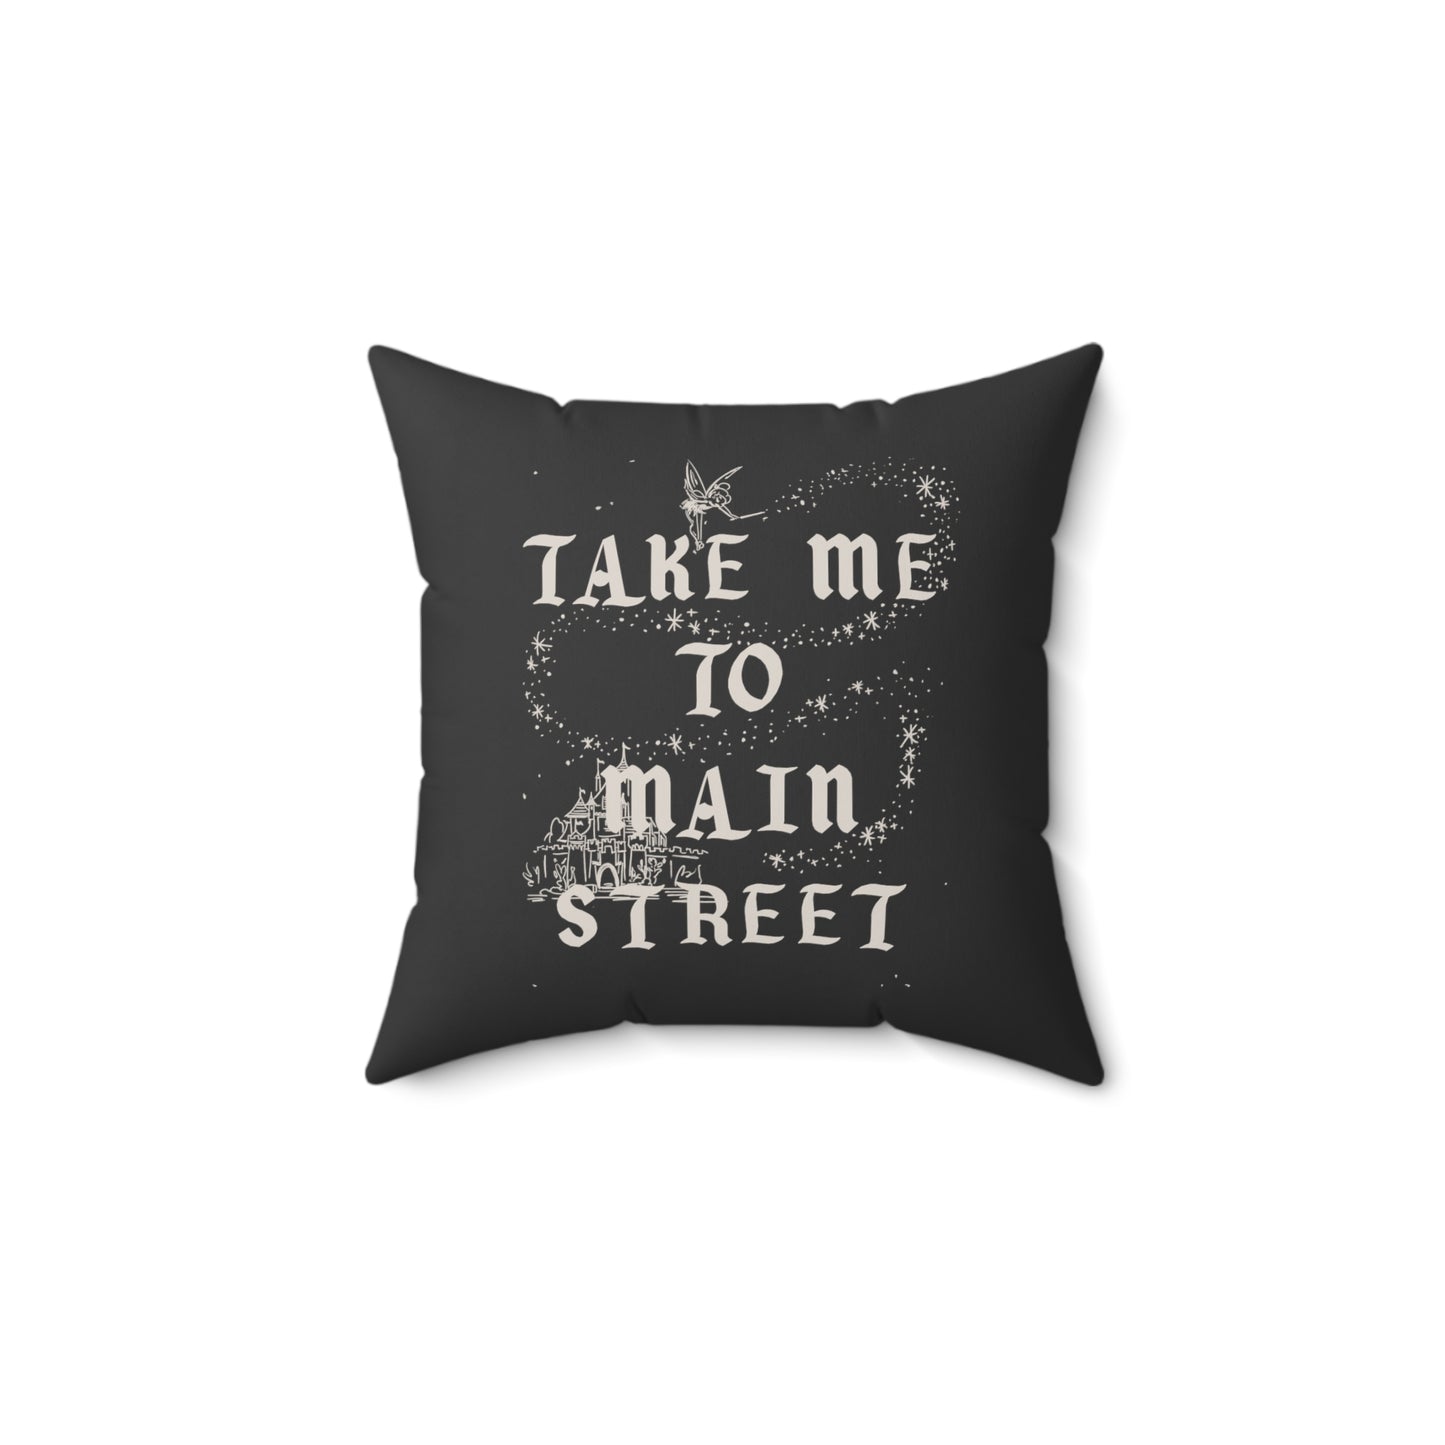 Take Me to Main Street Square Pillow